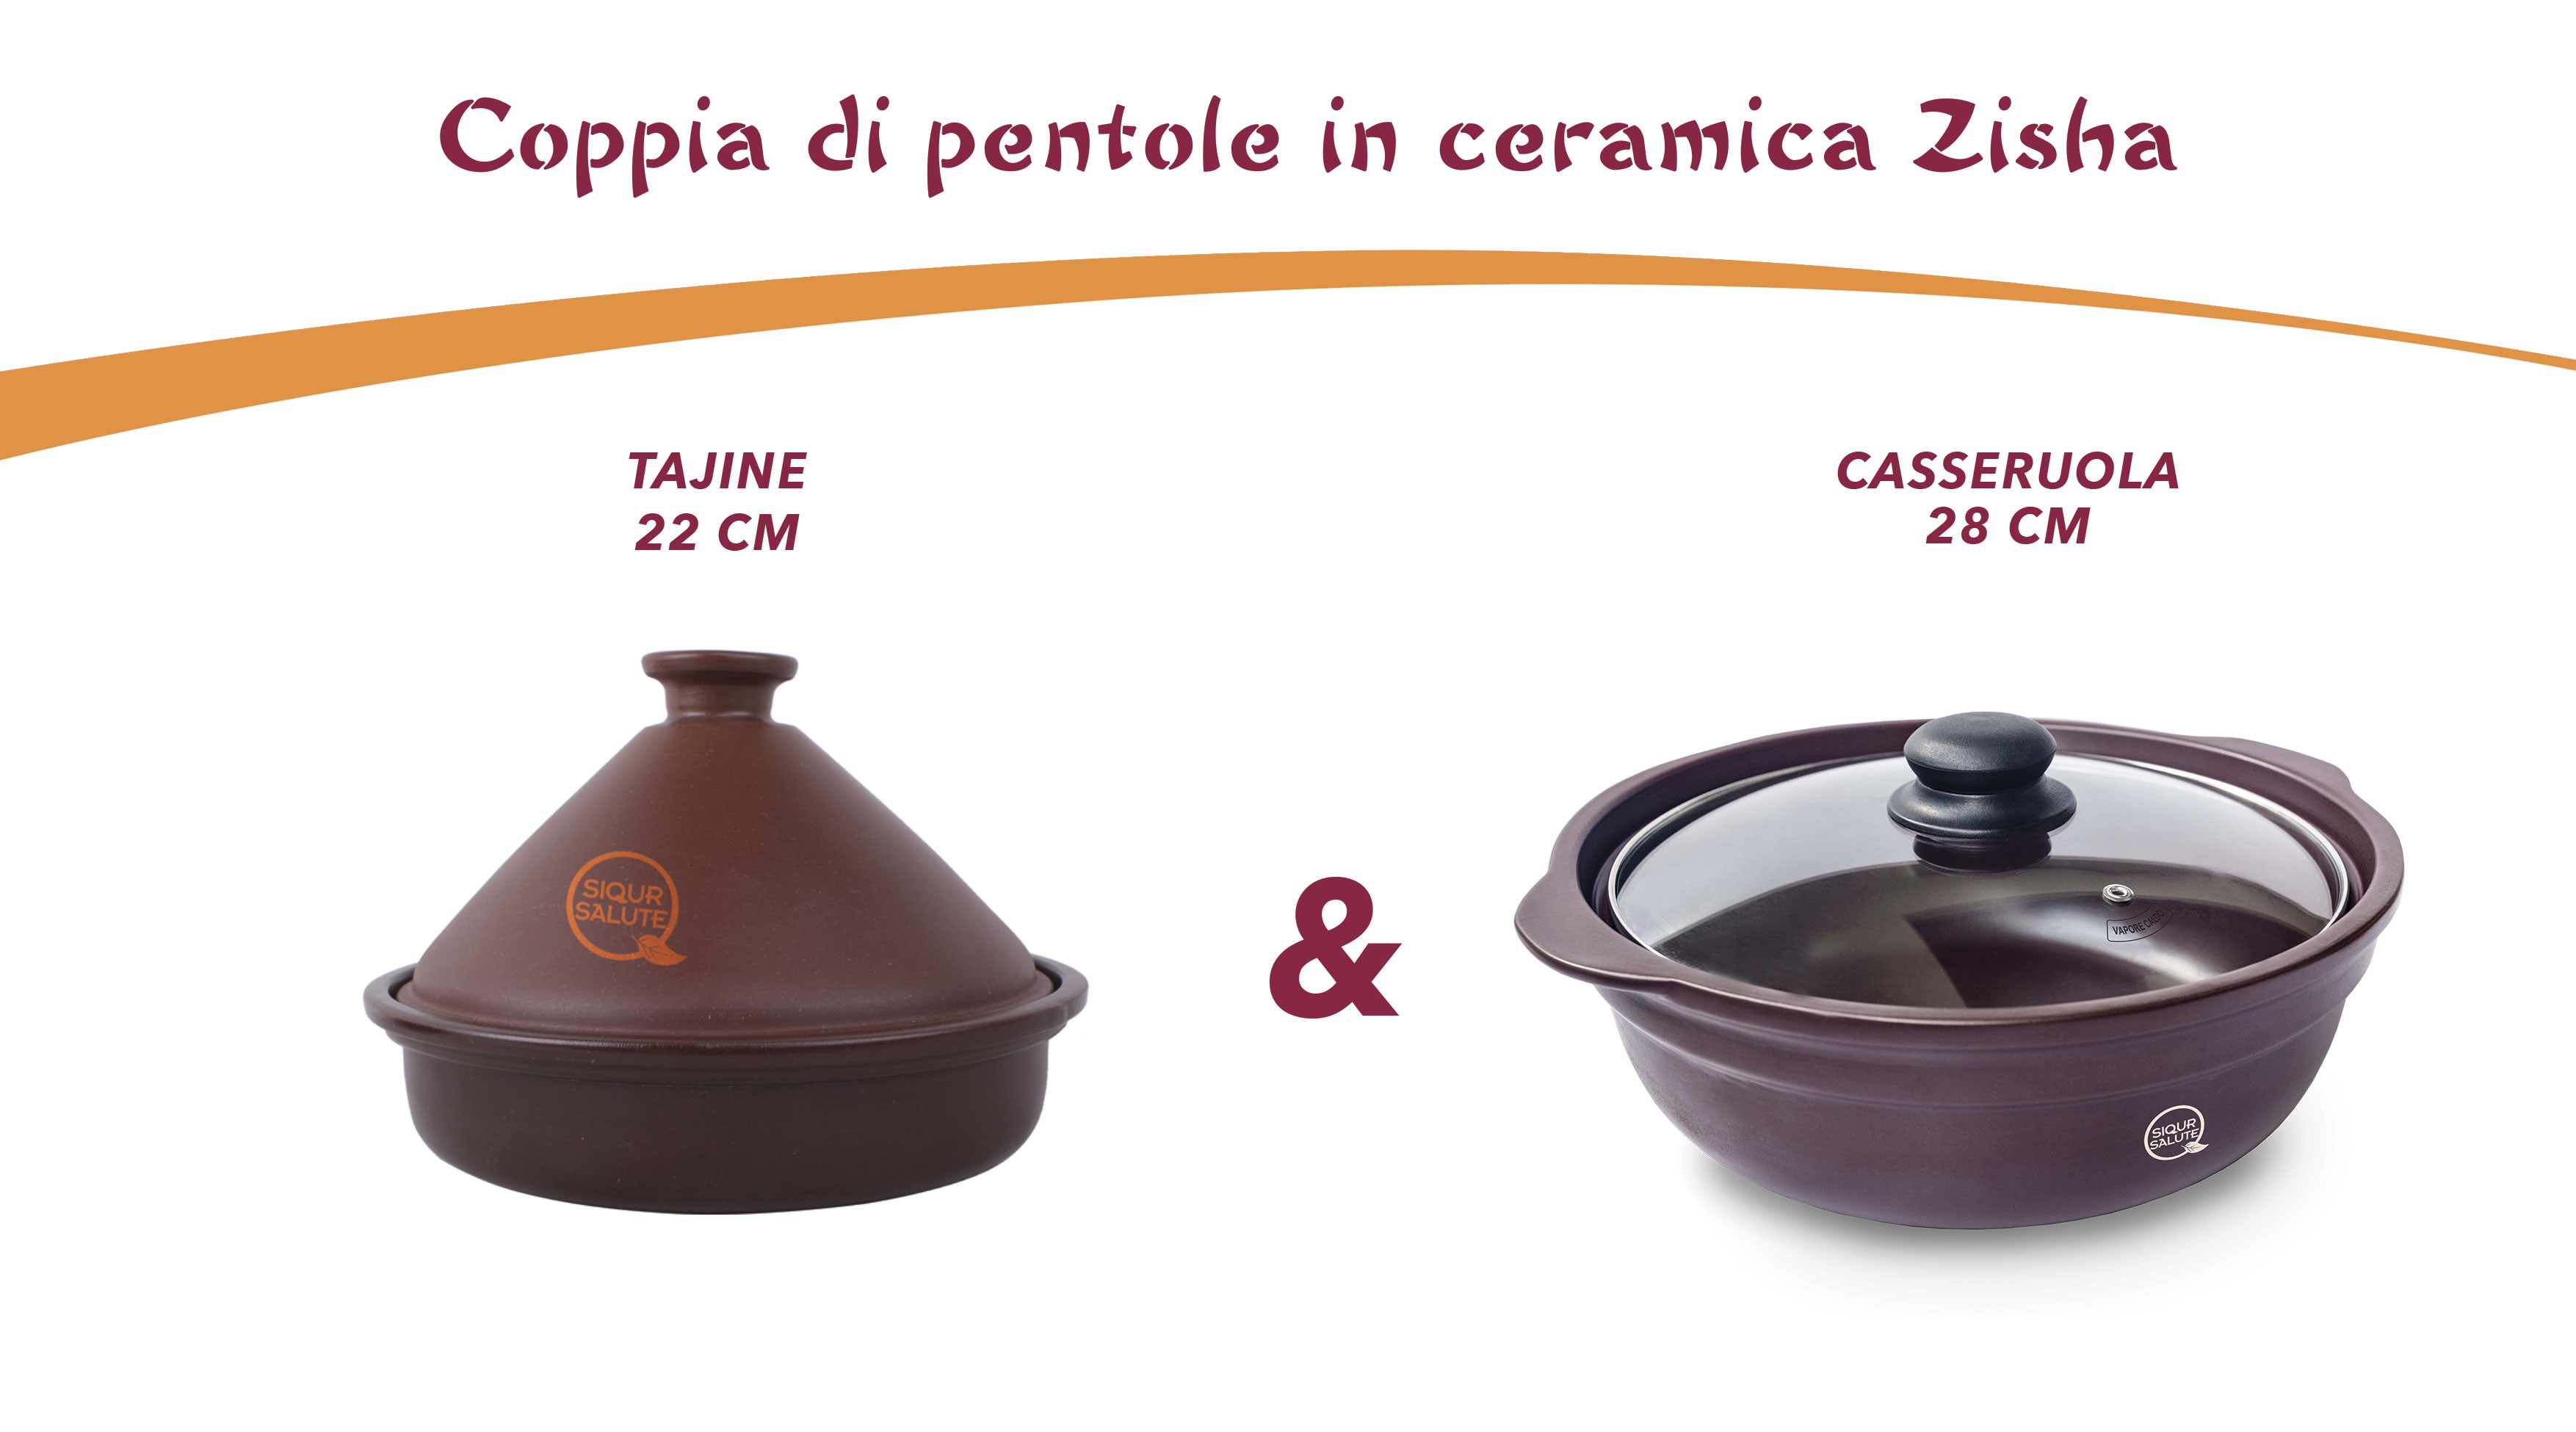 Coppia di pentole in ceramica Zisha (Tajine 22 & Casseruola 28)